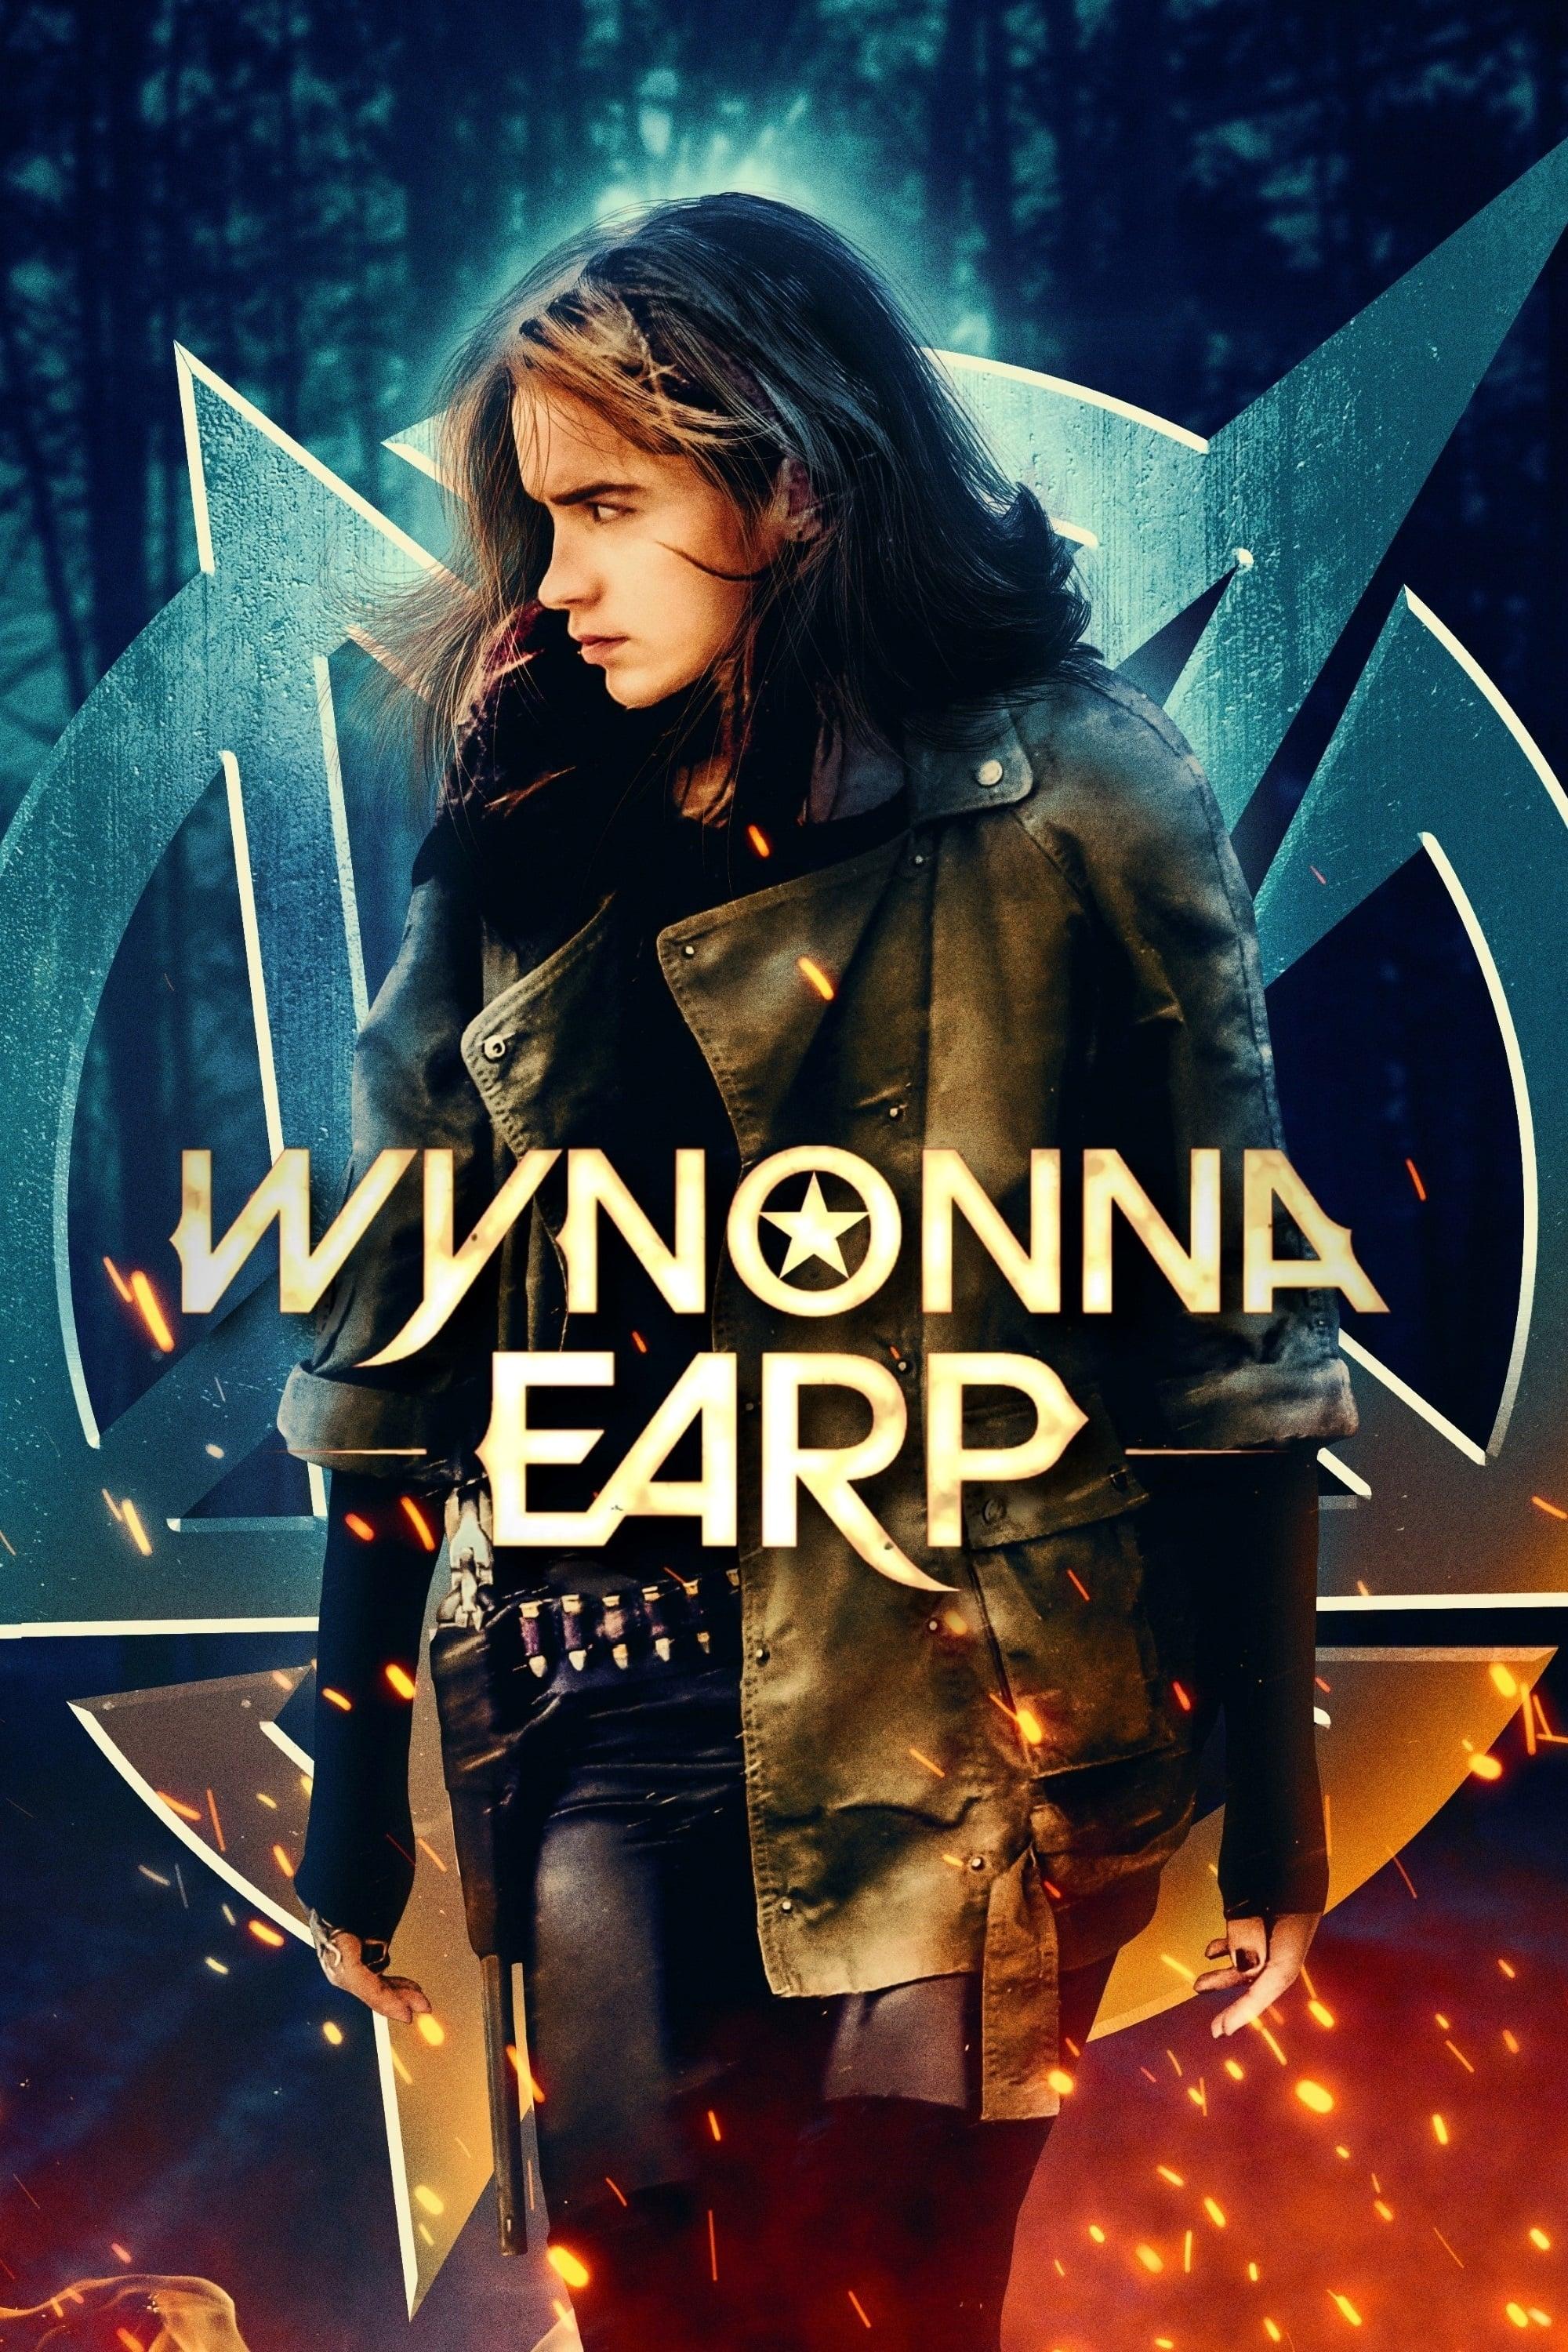 Wynonna Earp poster